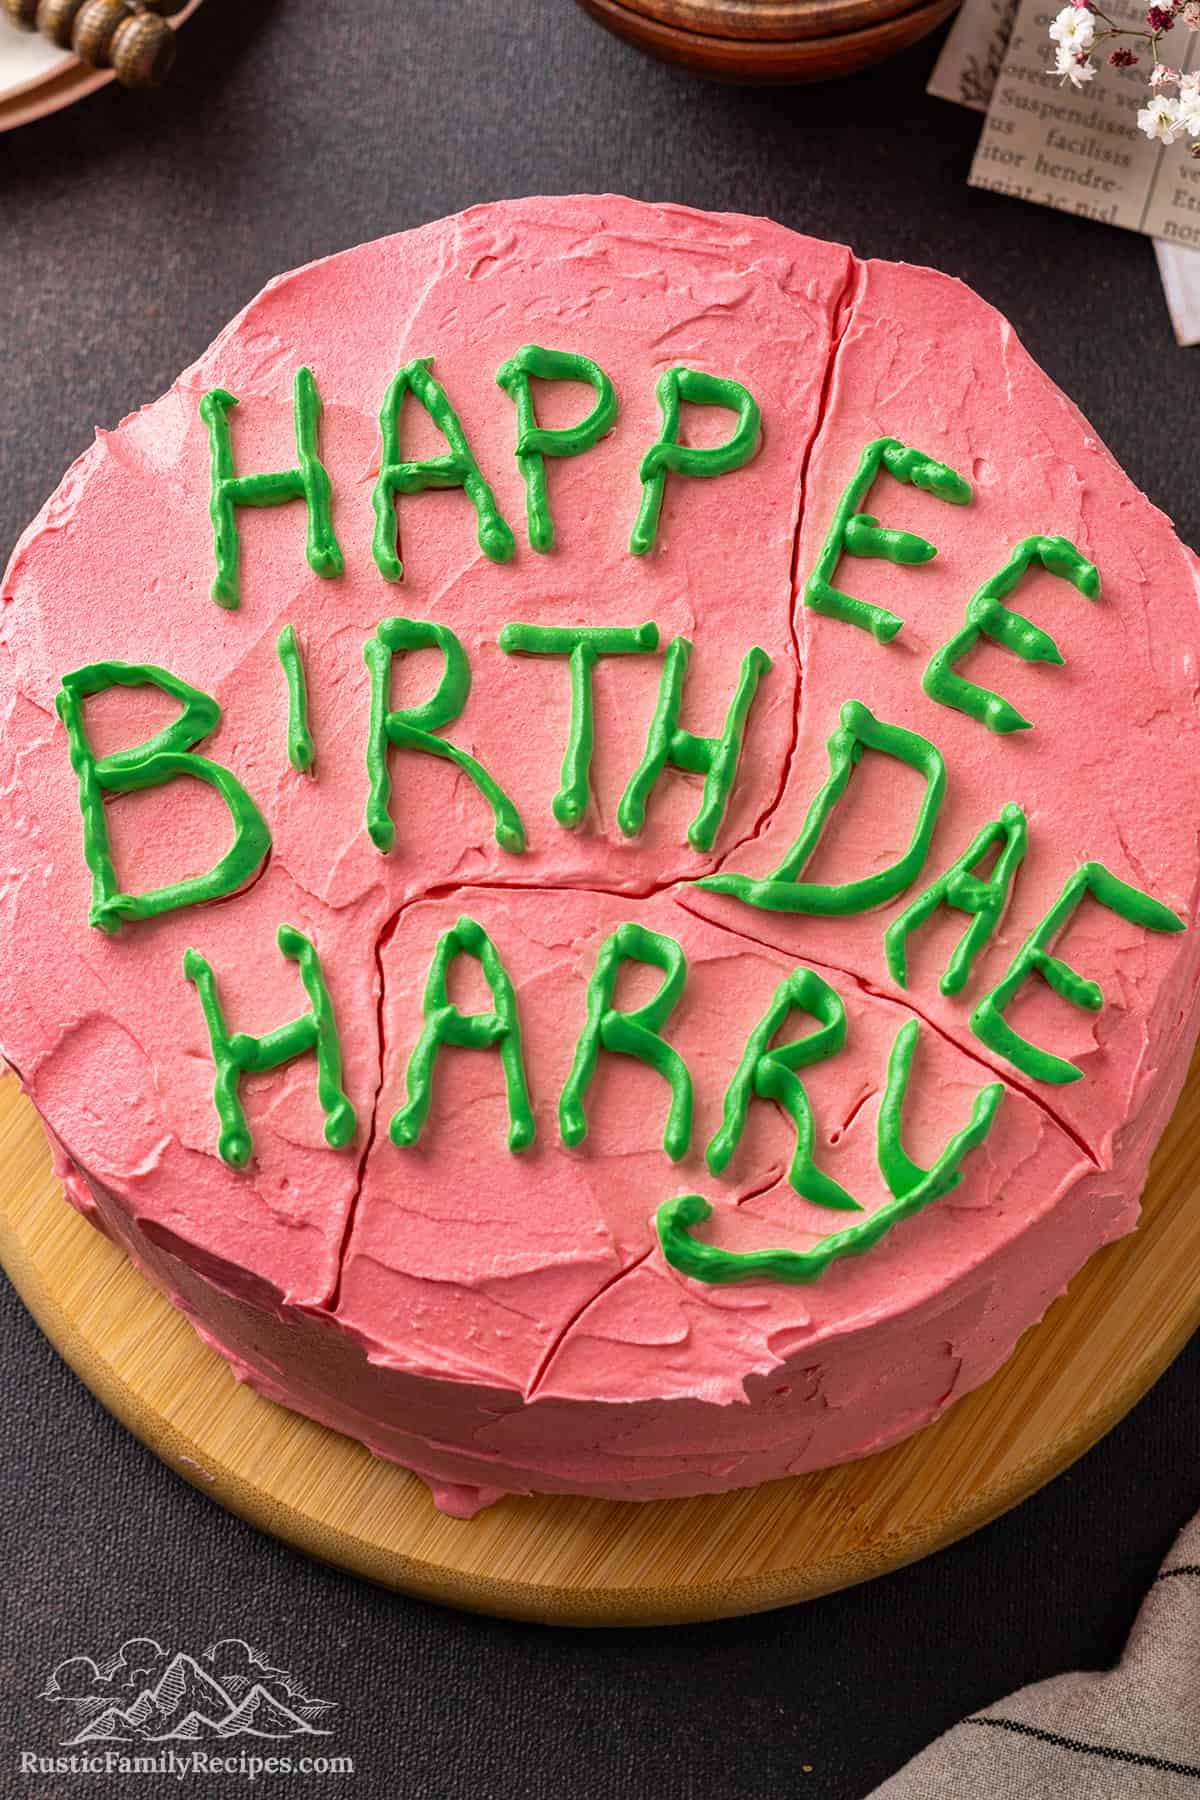 Harry Potter's Birthday Cake